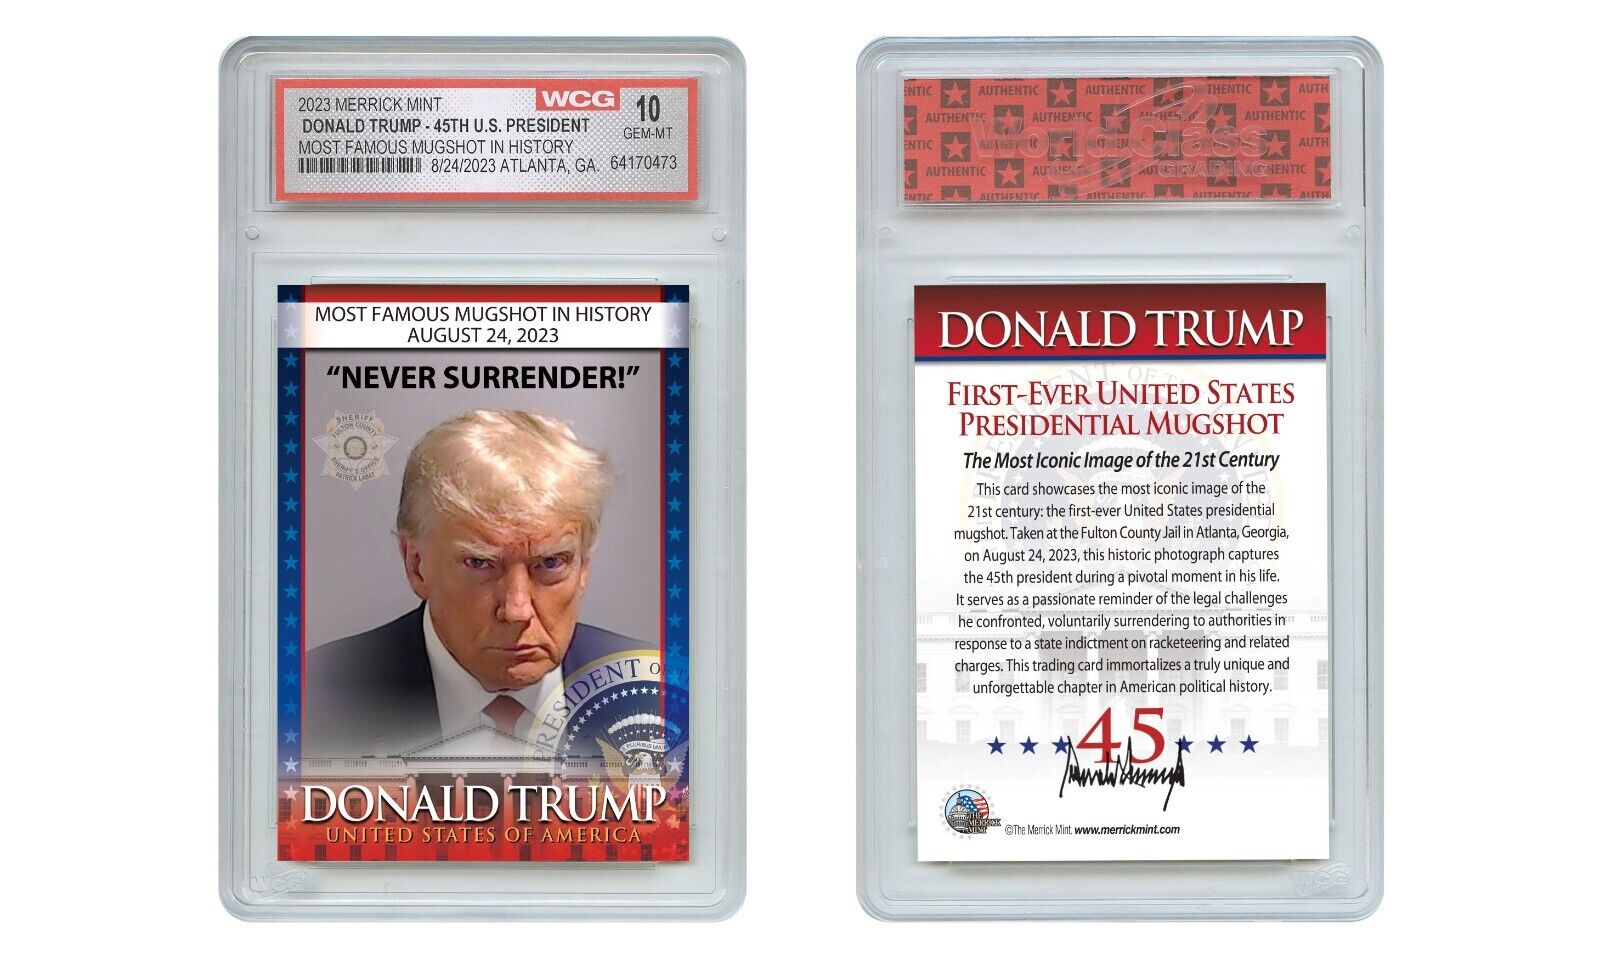 DONALD TRUMP 45th President MAGA Official MUGSHOT Photo Trading Card GEM-MINT 10